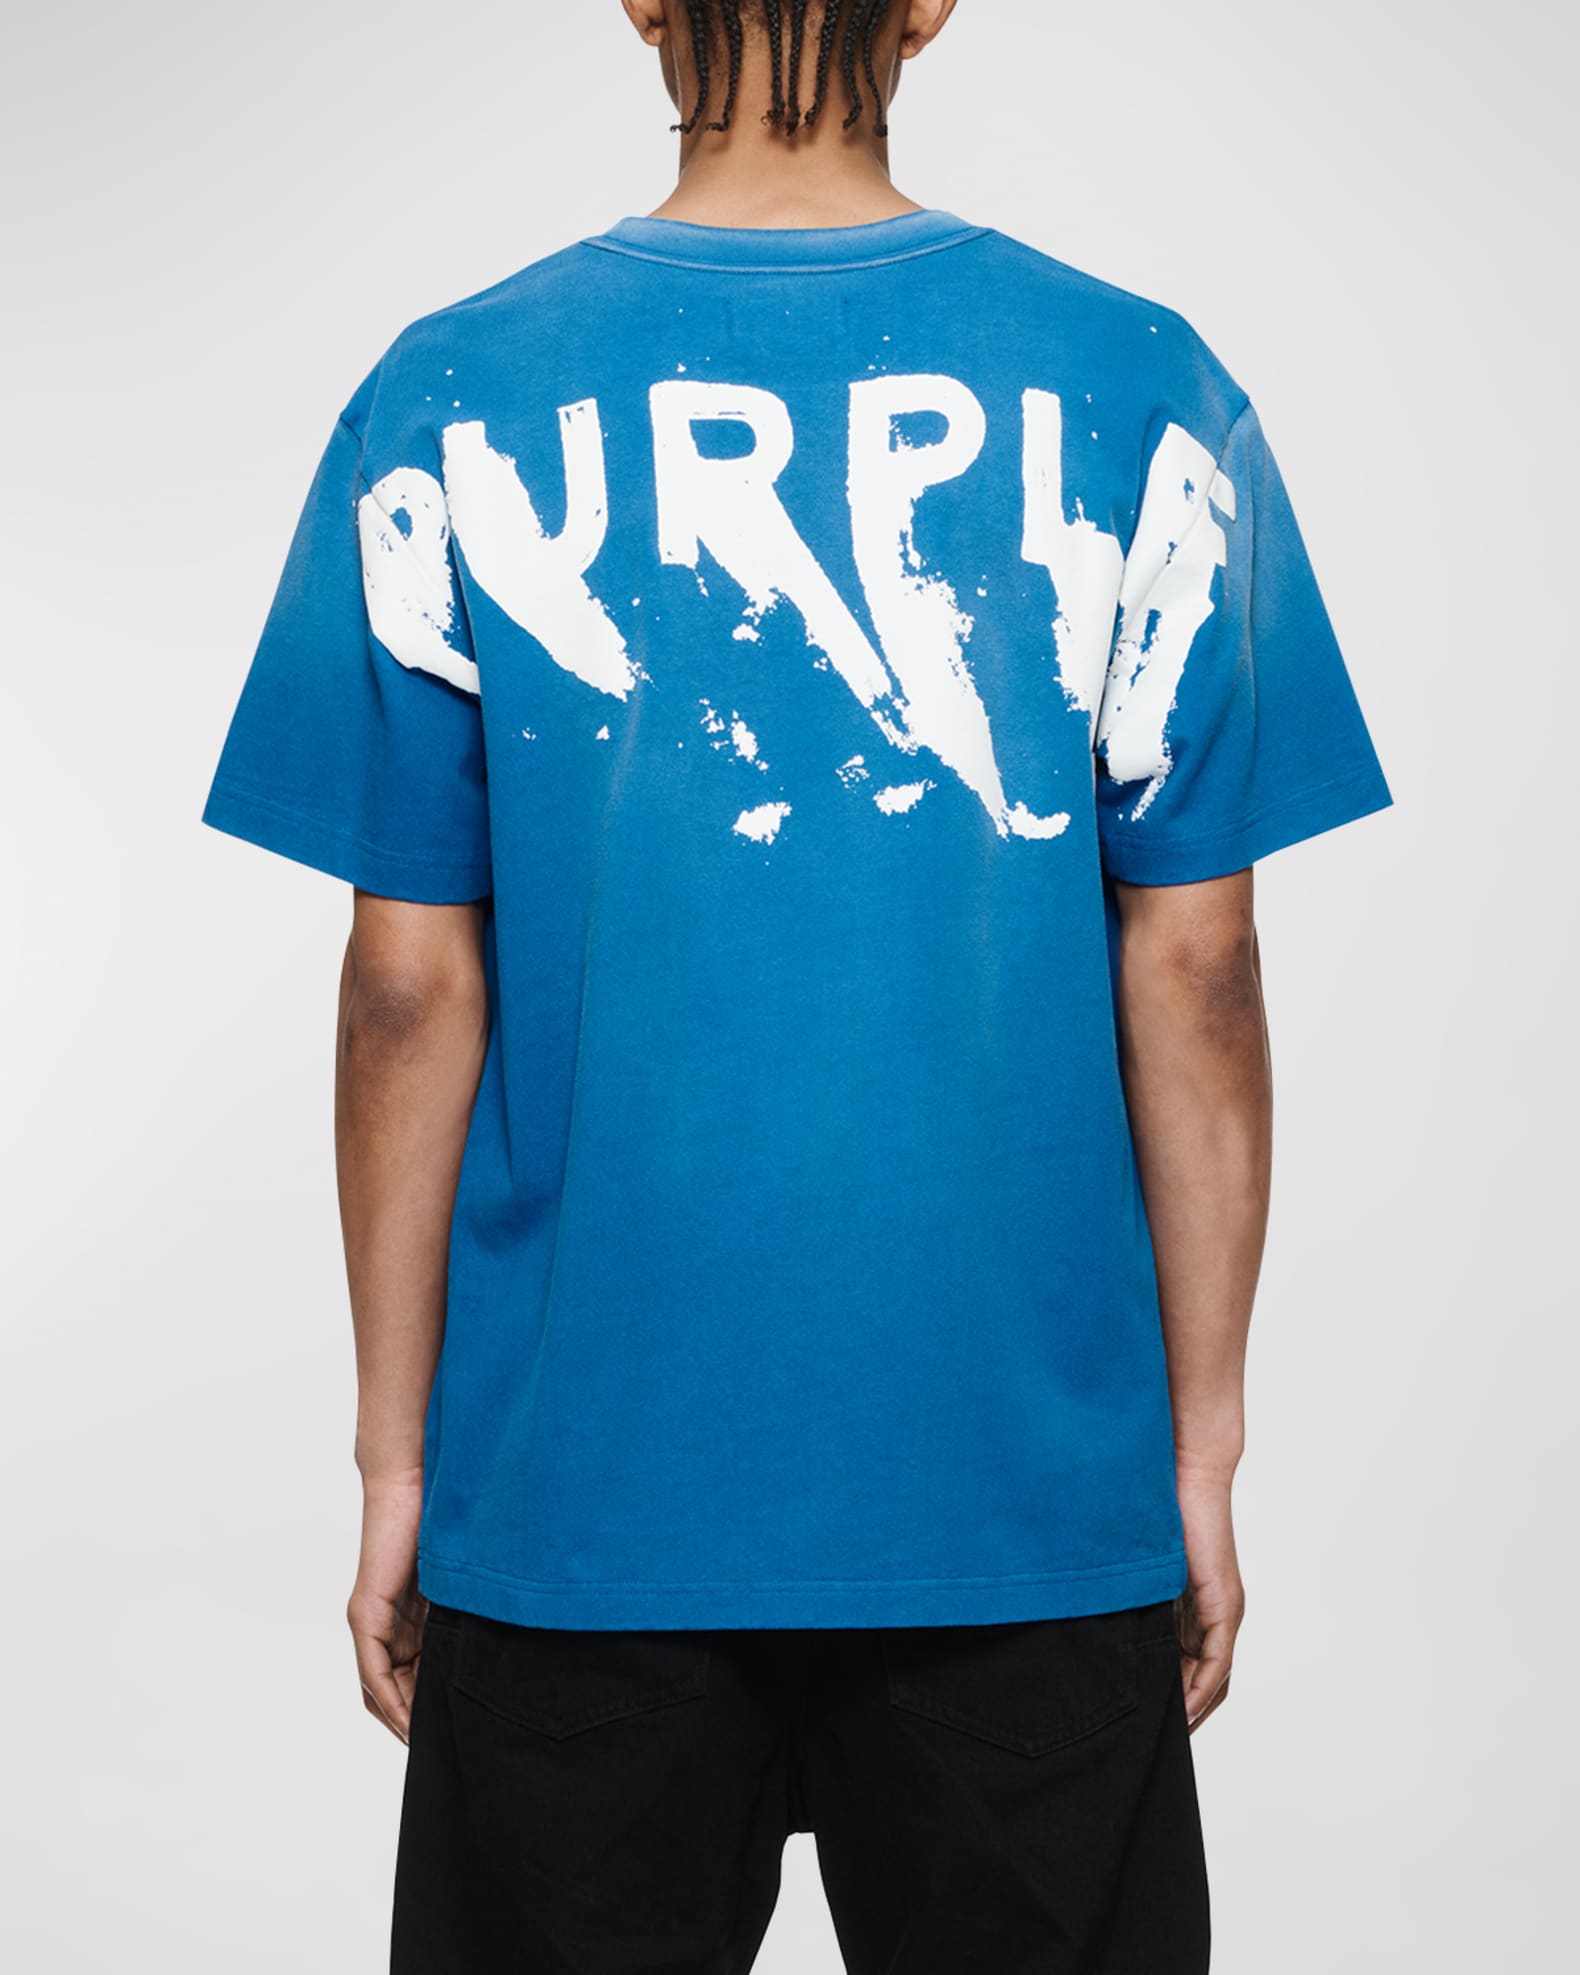 PURPLE Men's Graphic Heavy Jersey T-Shirt | Neiman Marcus